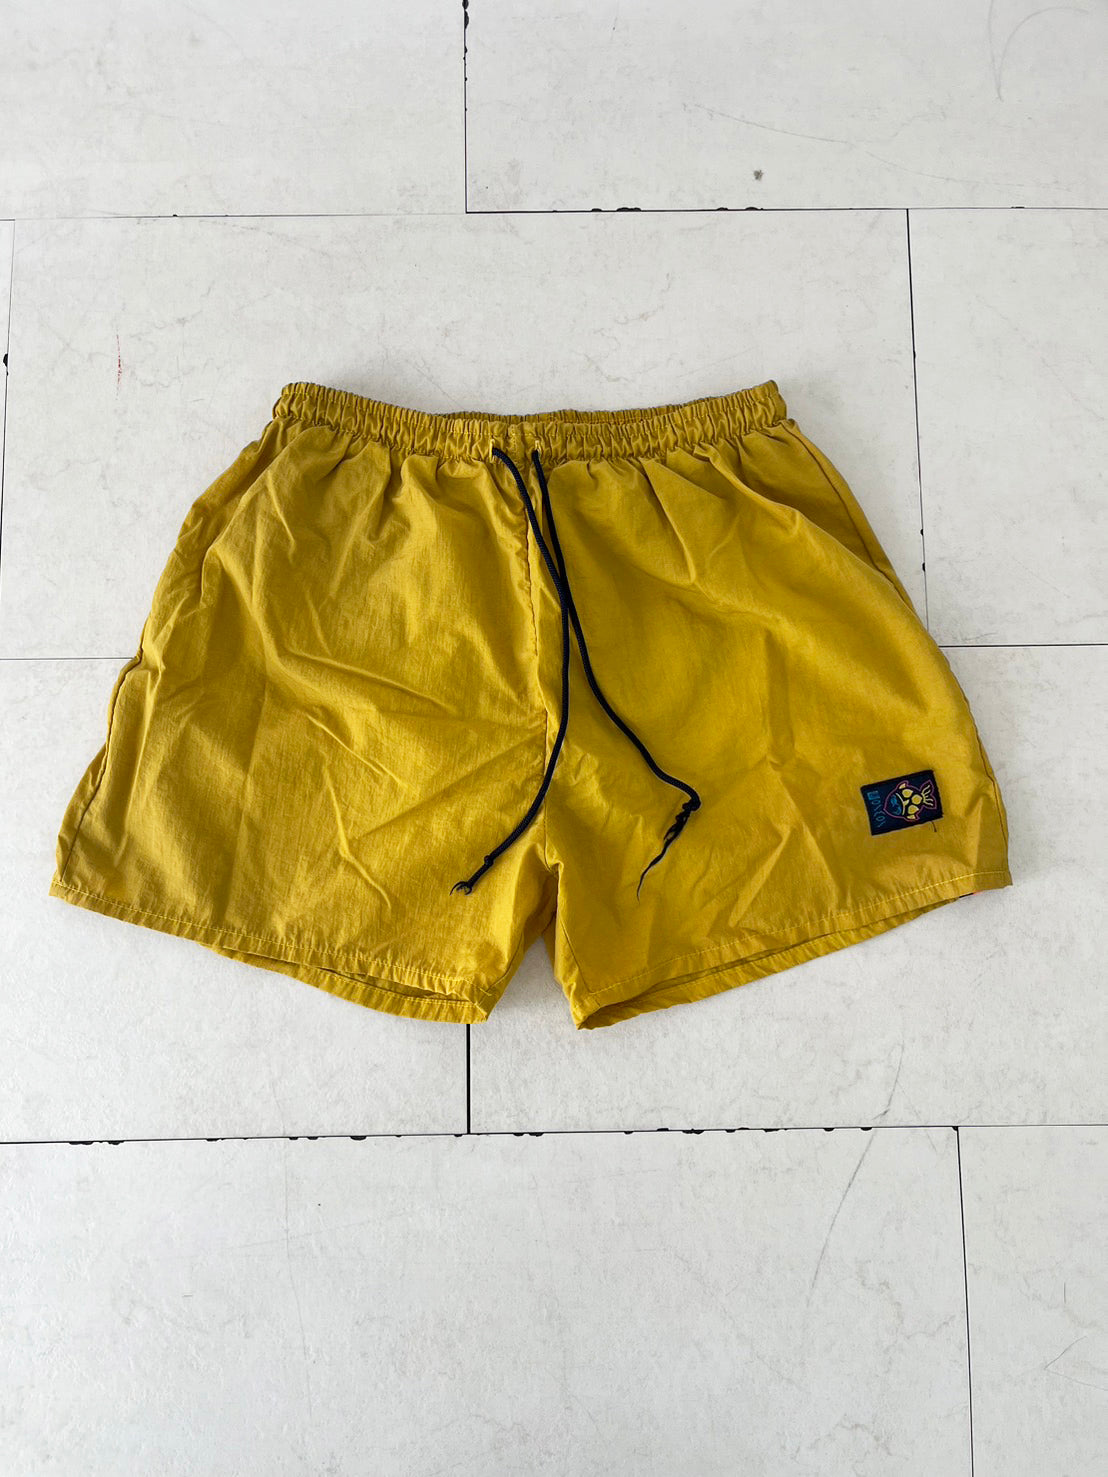 EURO vintage beach shorts Gold fish水着 サーフパンツ ビーチショーツ (women's L相当）